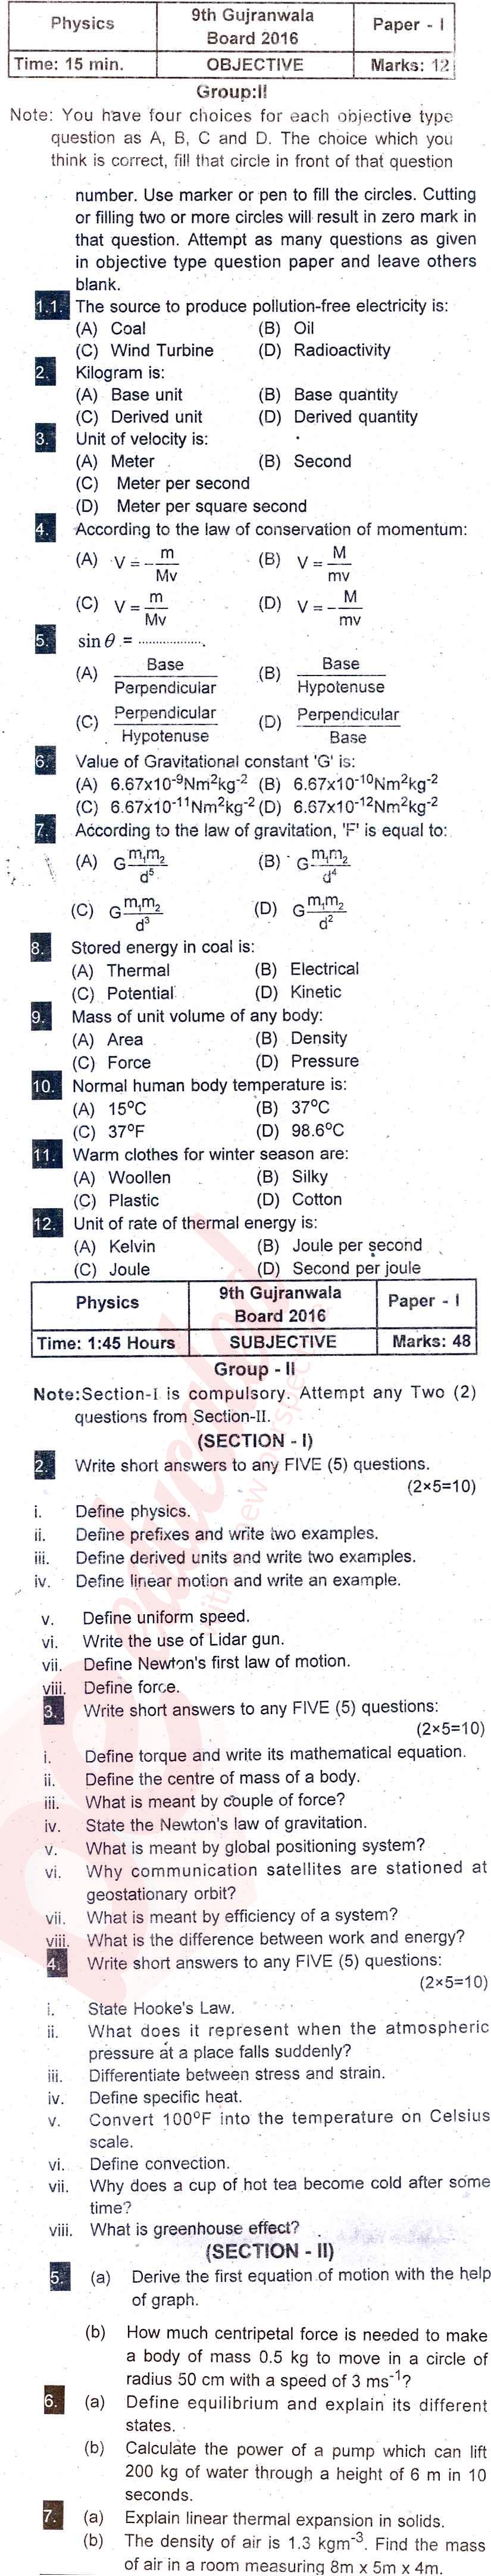 Physics 9th English Medium Past Paper Group 2 BISE Gujranwala 2016